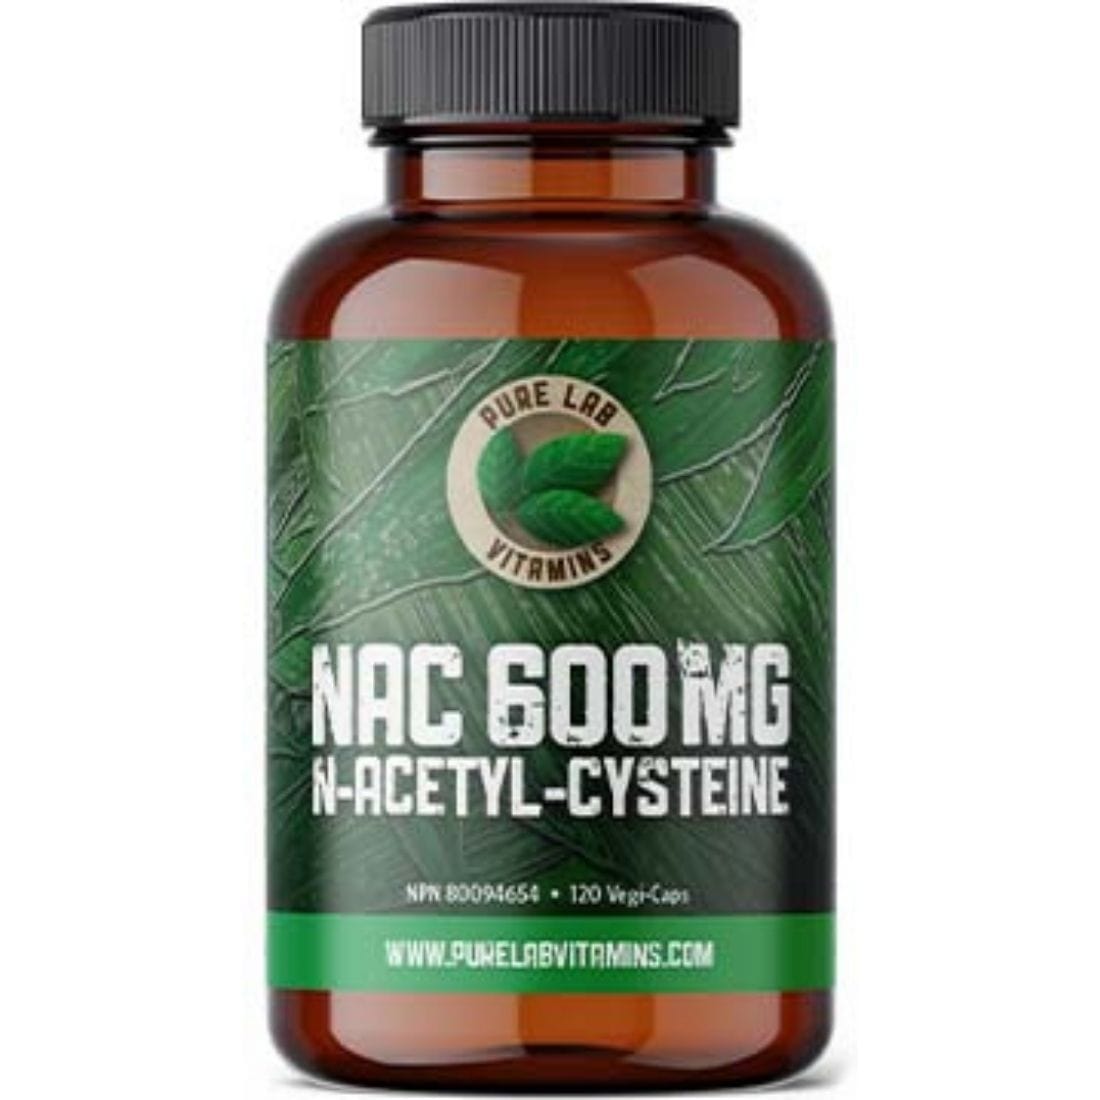 Pure Lab Vitamins NAC 600mg, 120 Vegetable Capsules